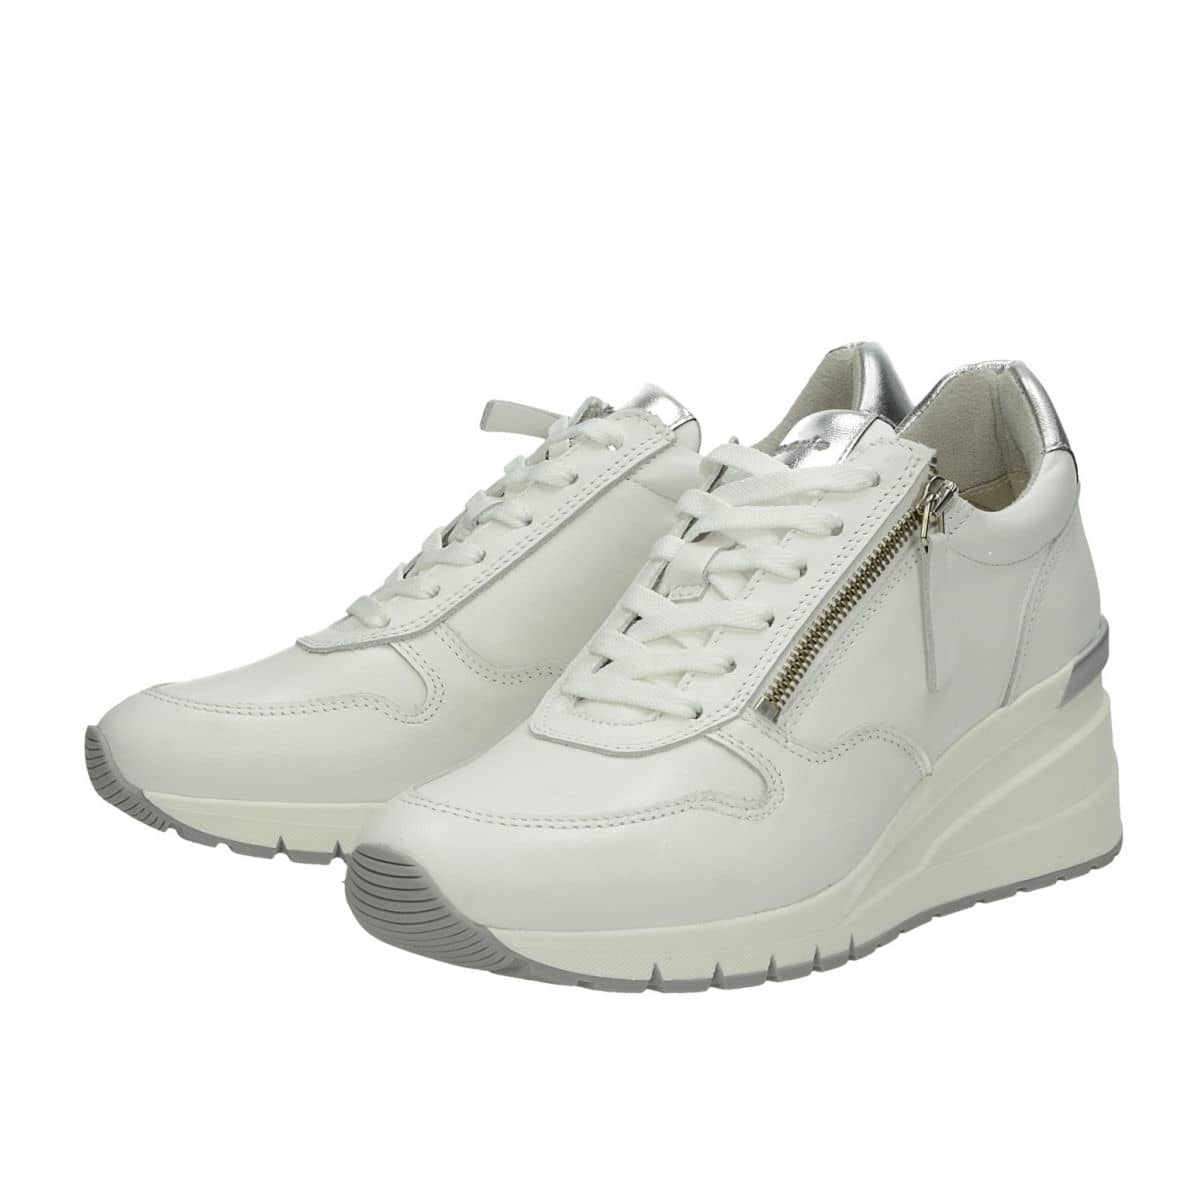 stylish sneaker white | Robel.shoes